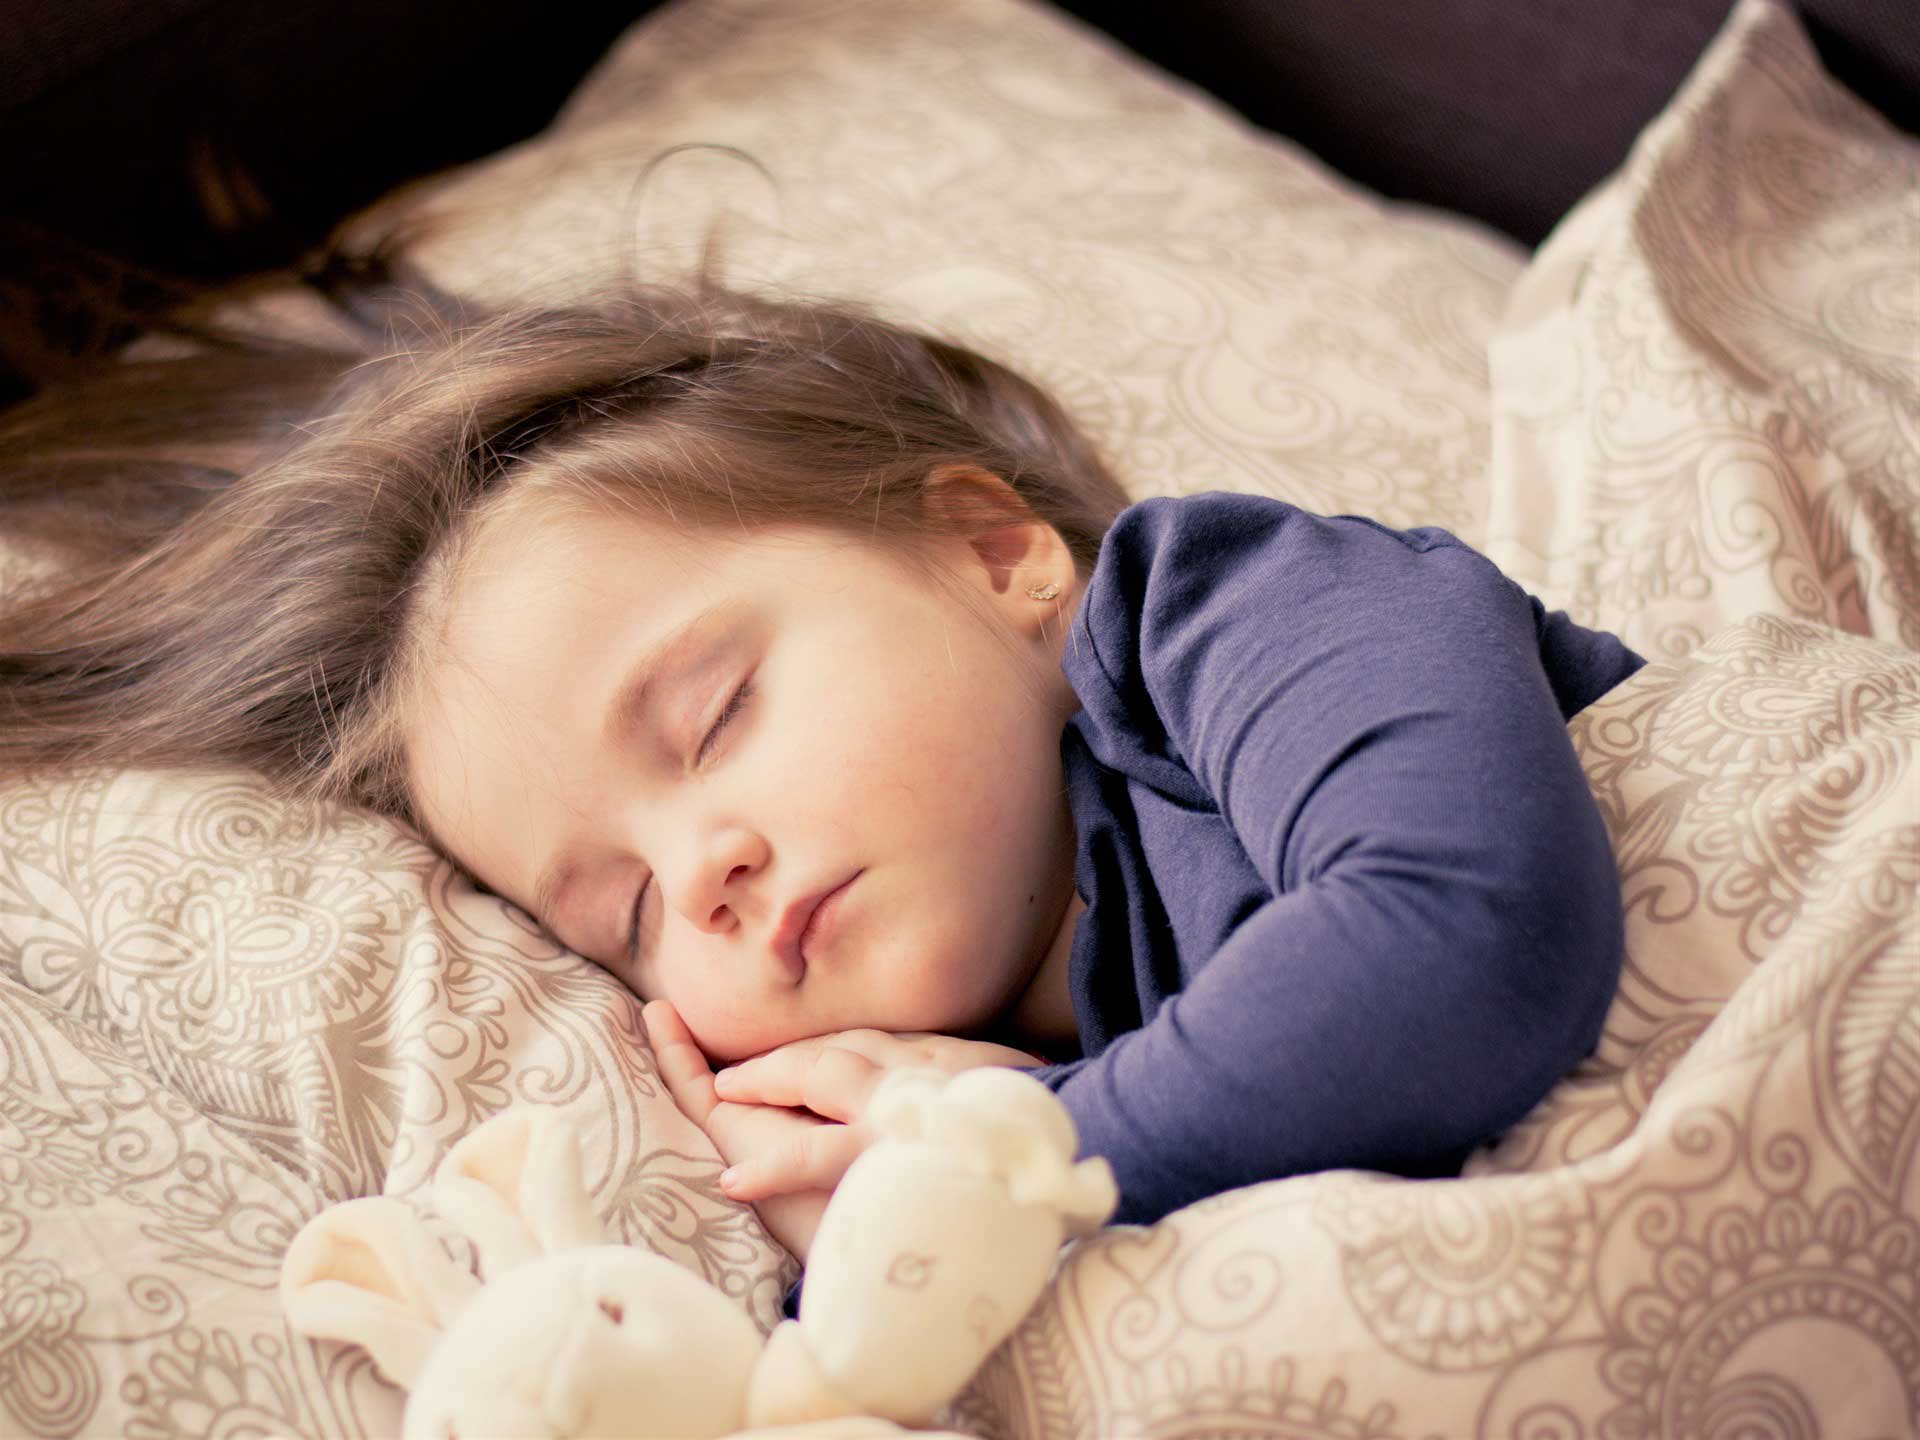 Child-Sleeping-With-Stuffed-Animal.jpg